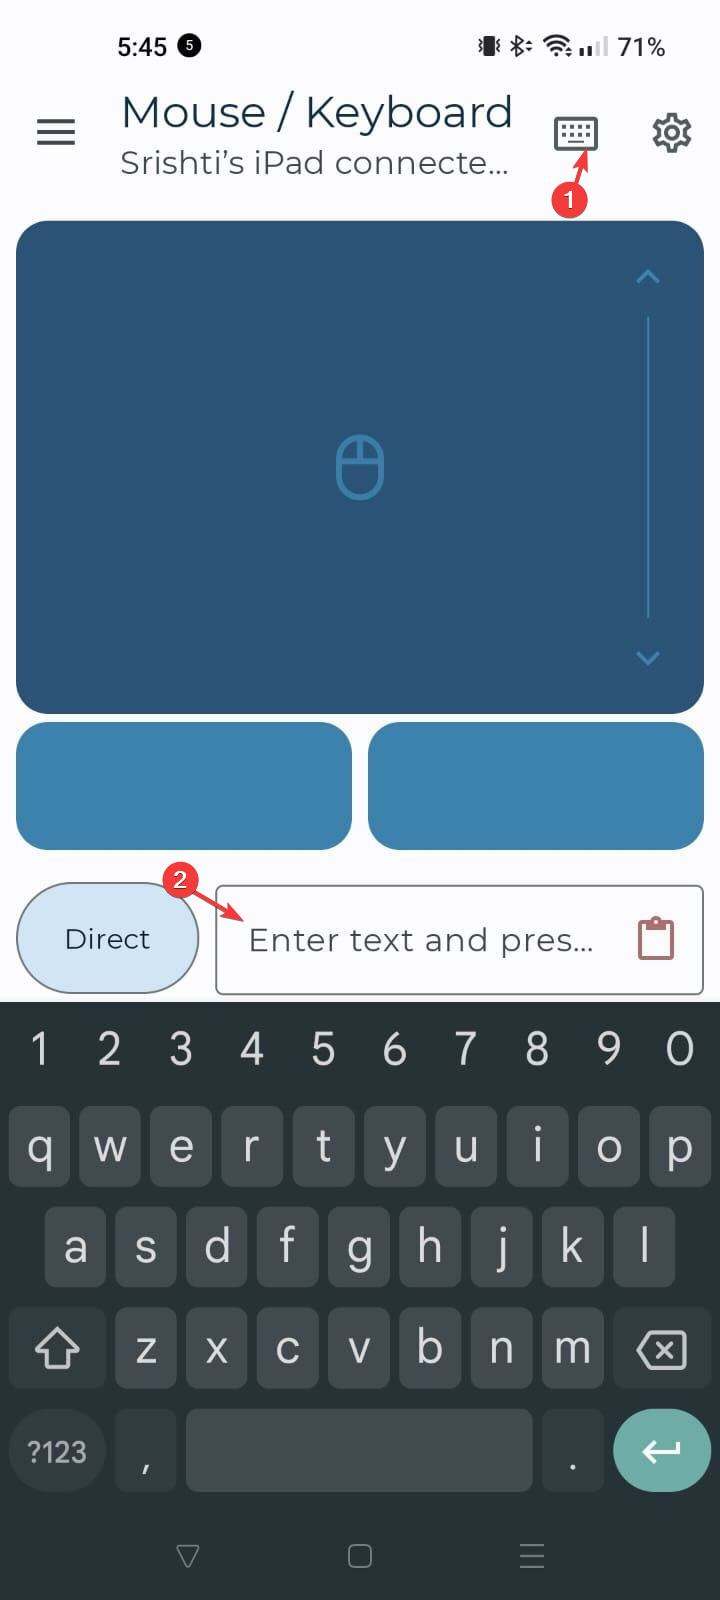 Select a keyboard icon